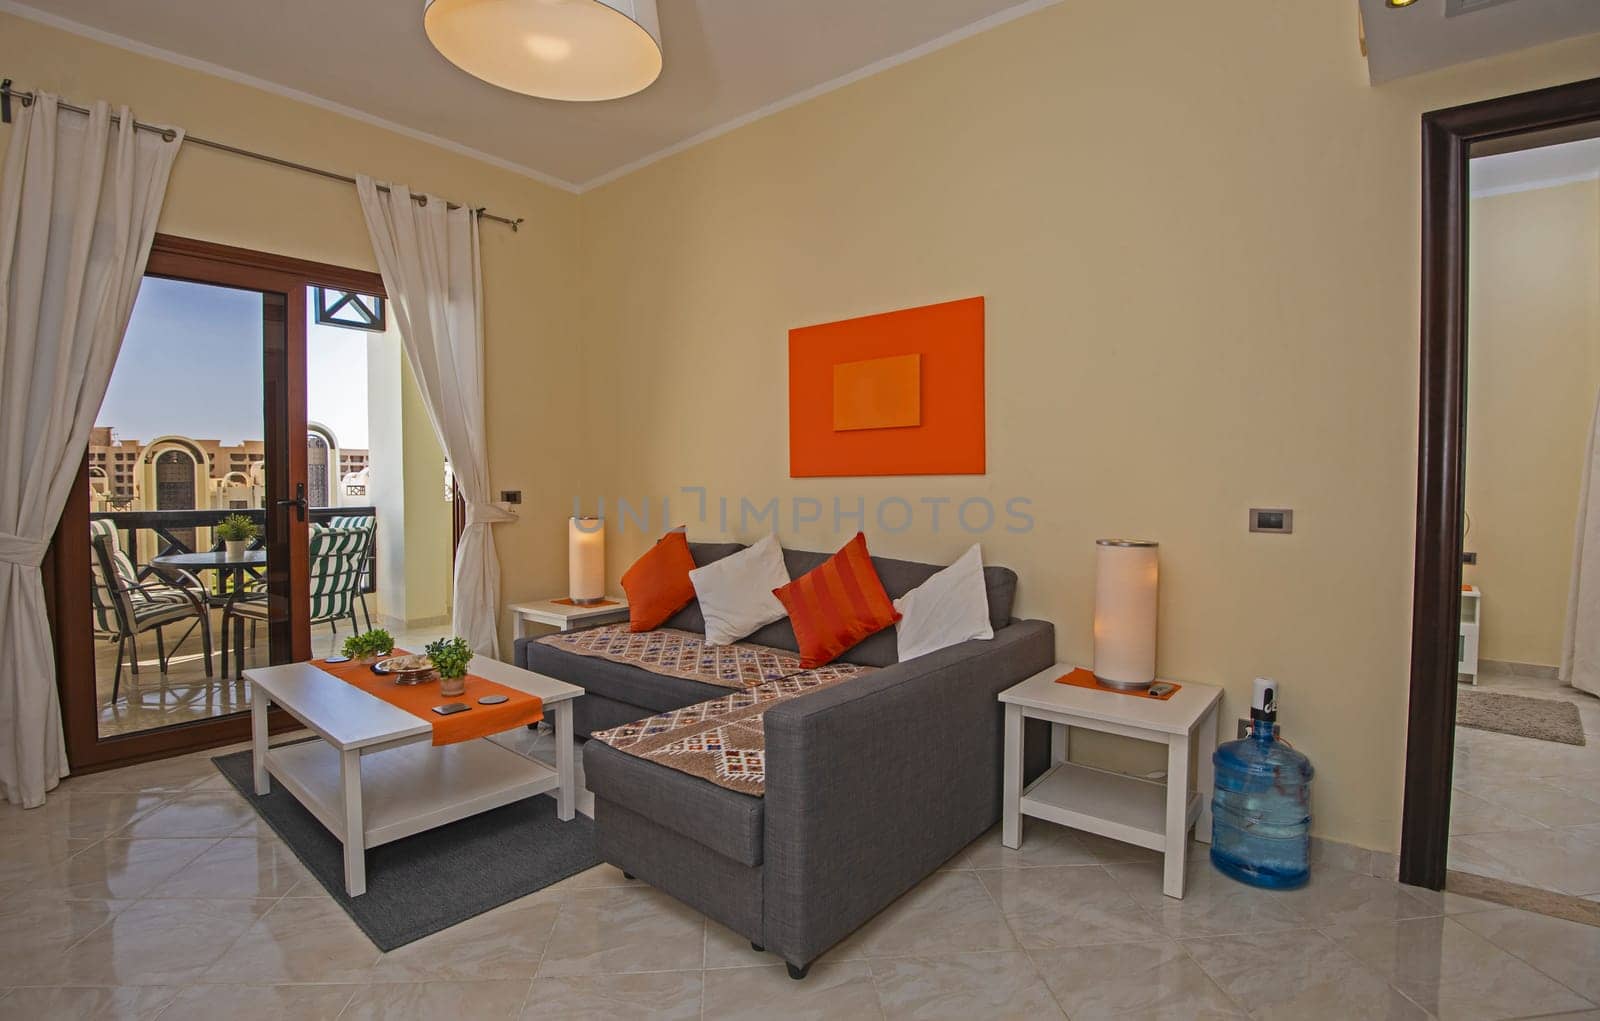 Interior design of luxury apartment living room with balcony by paulvinten